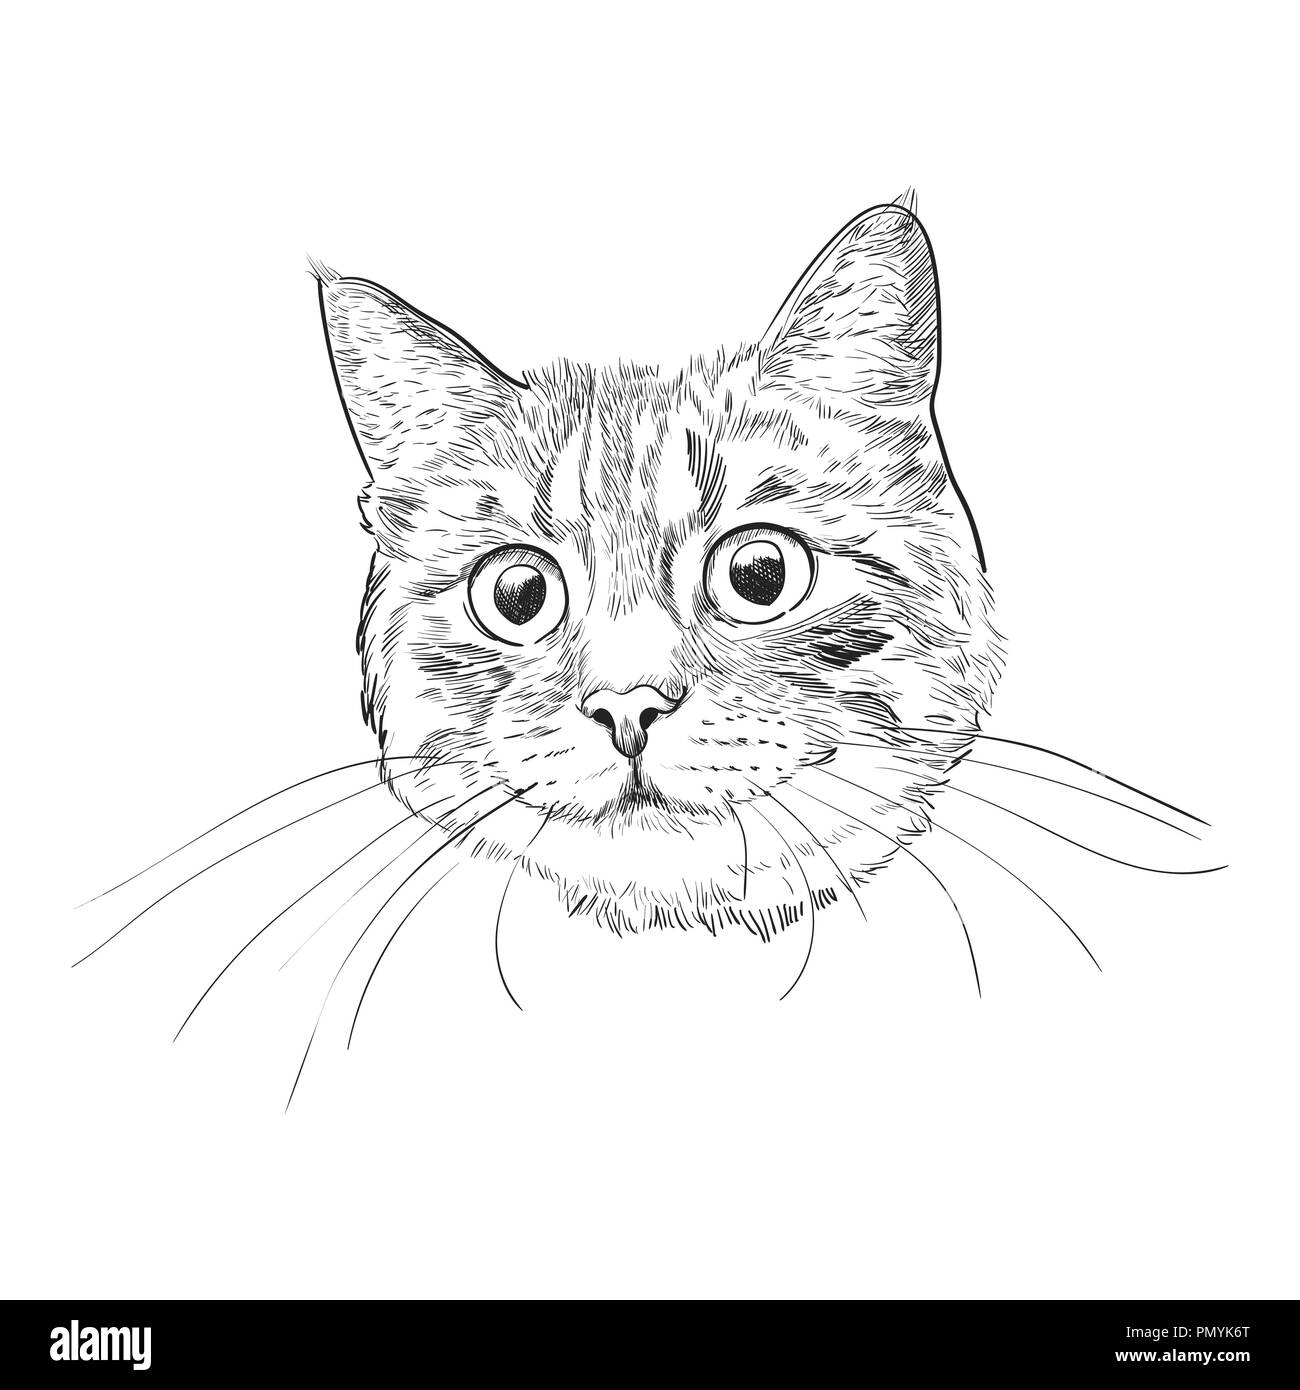 Cat face sketch vector stock vector. Illustration of shorthair - 91312827